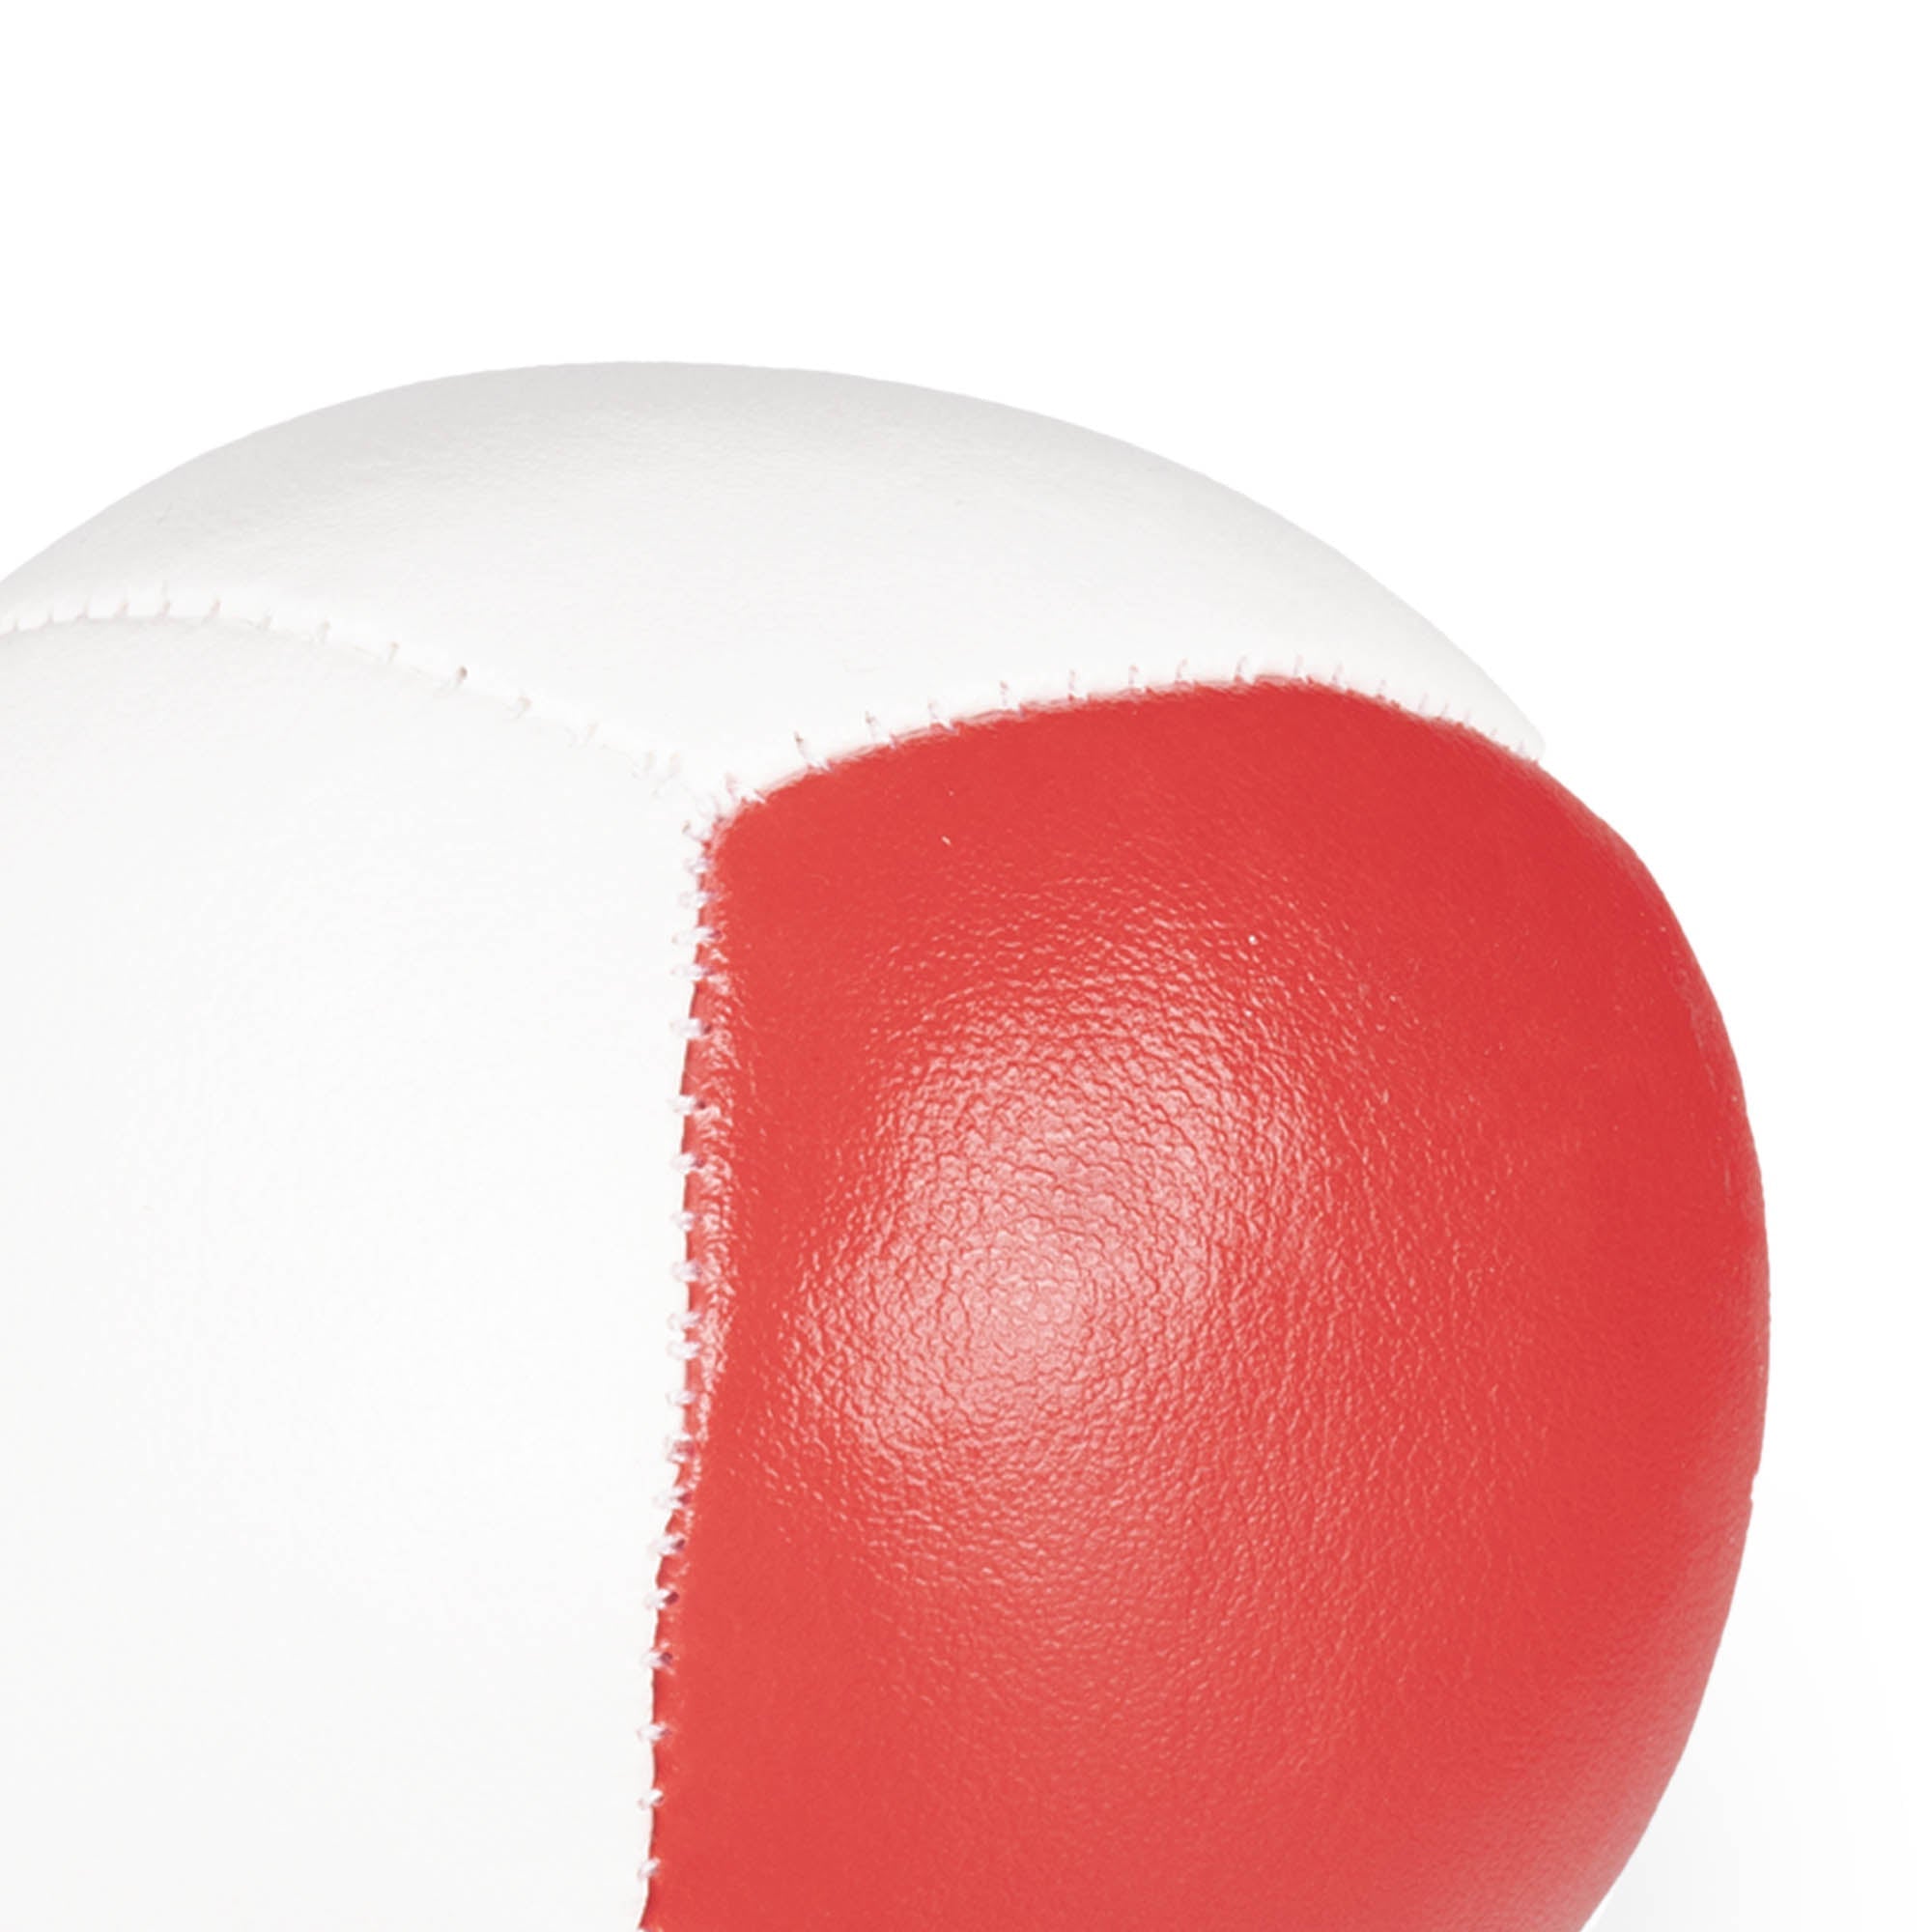 Firetoys 110g thud juggling ball, close up stitching red/white